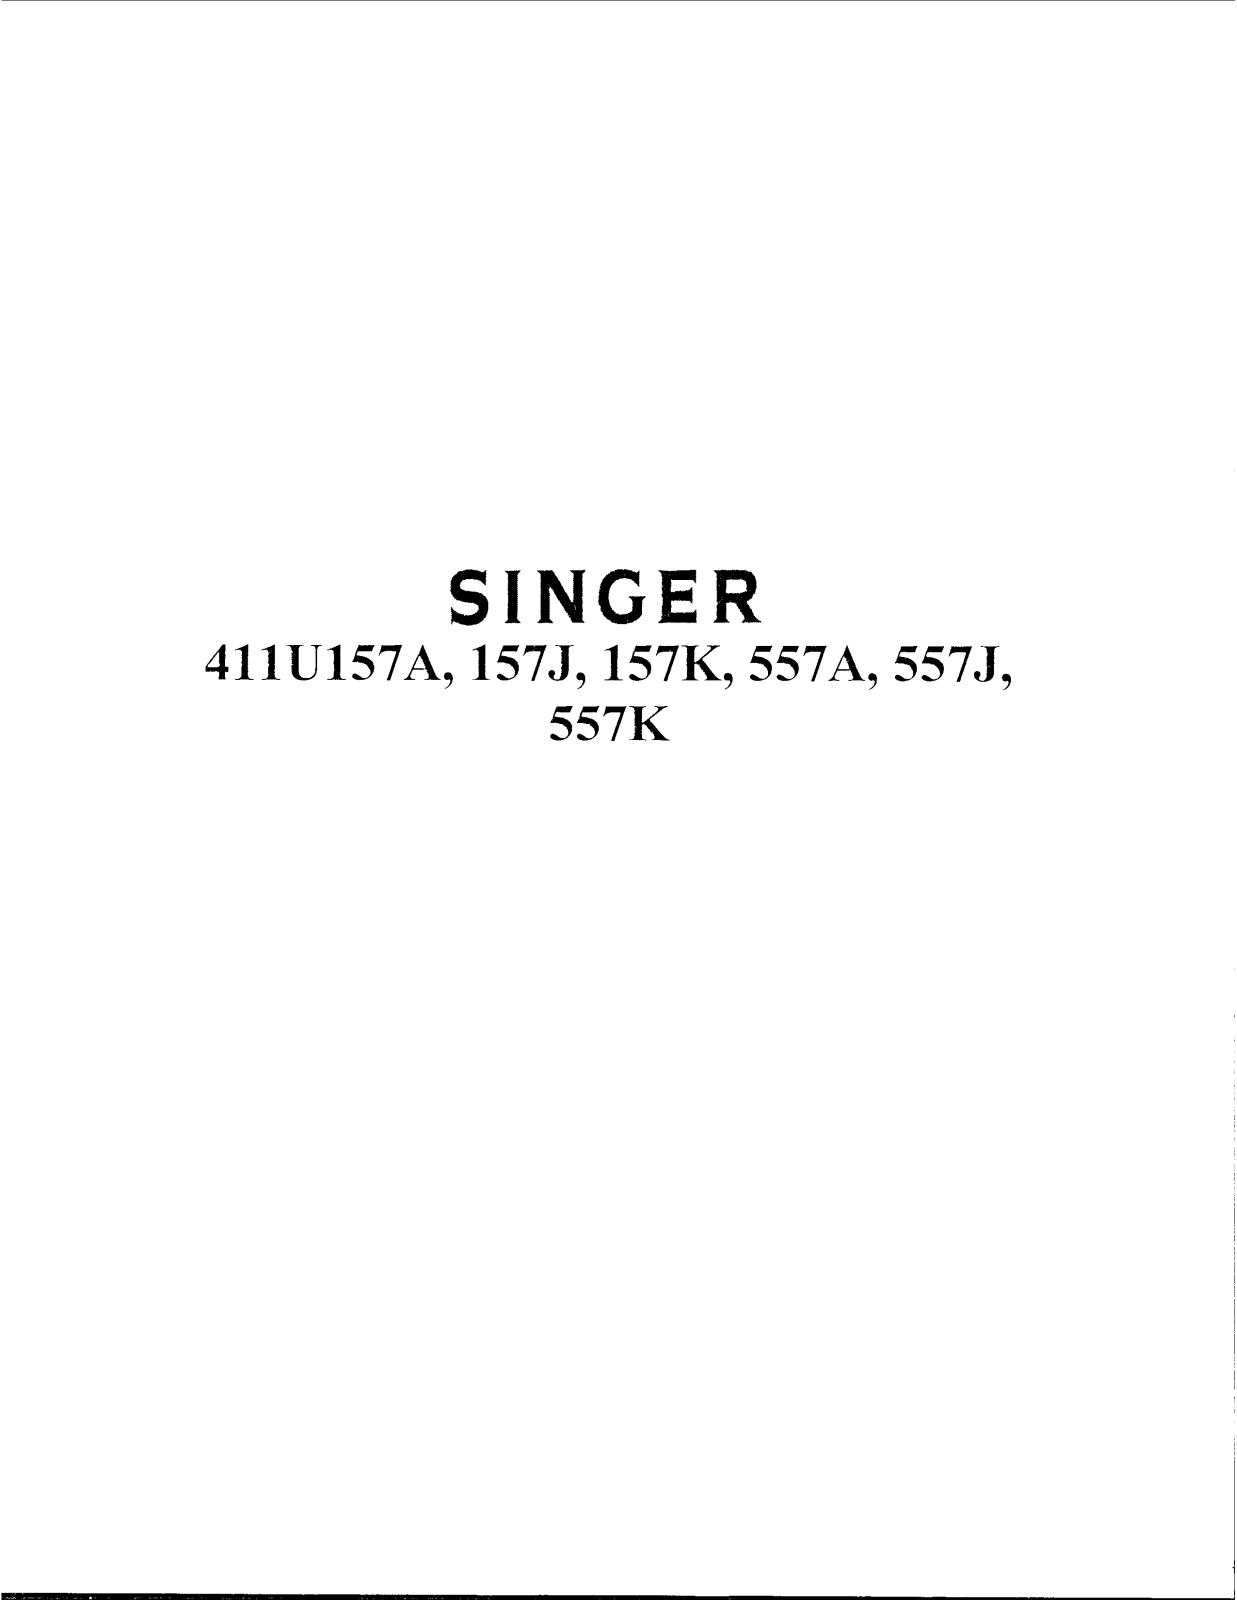 Singer 411U157A, 411U157J, 411U157K, 411U557A, 411U557J Parts List